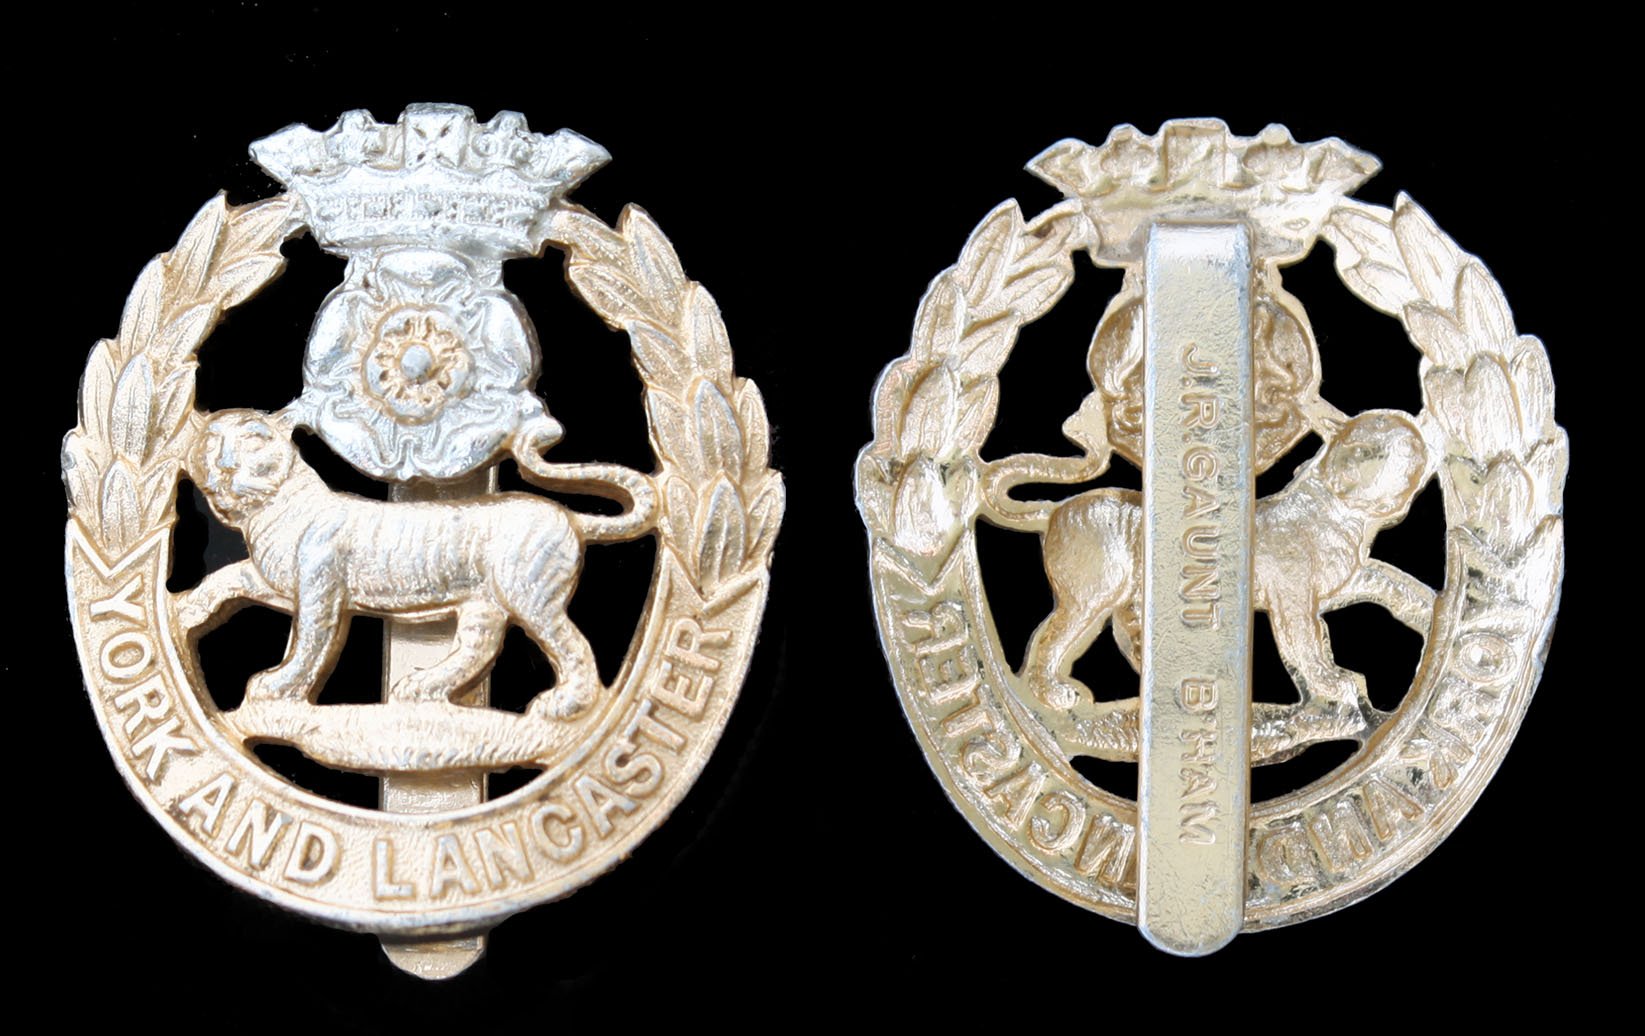 An Anodised Aluminium (Staybright) Army Cadet Badge 1966 to 1985